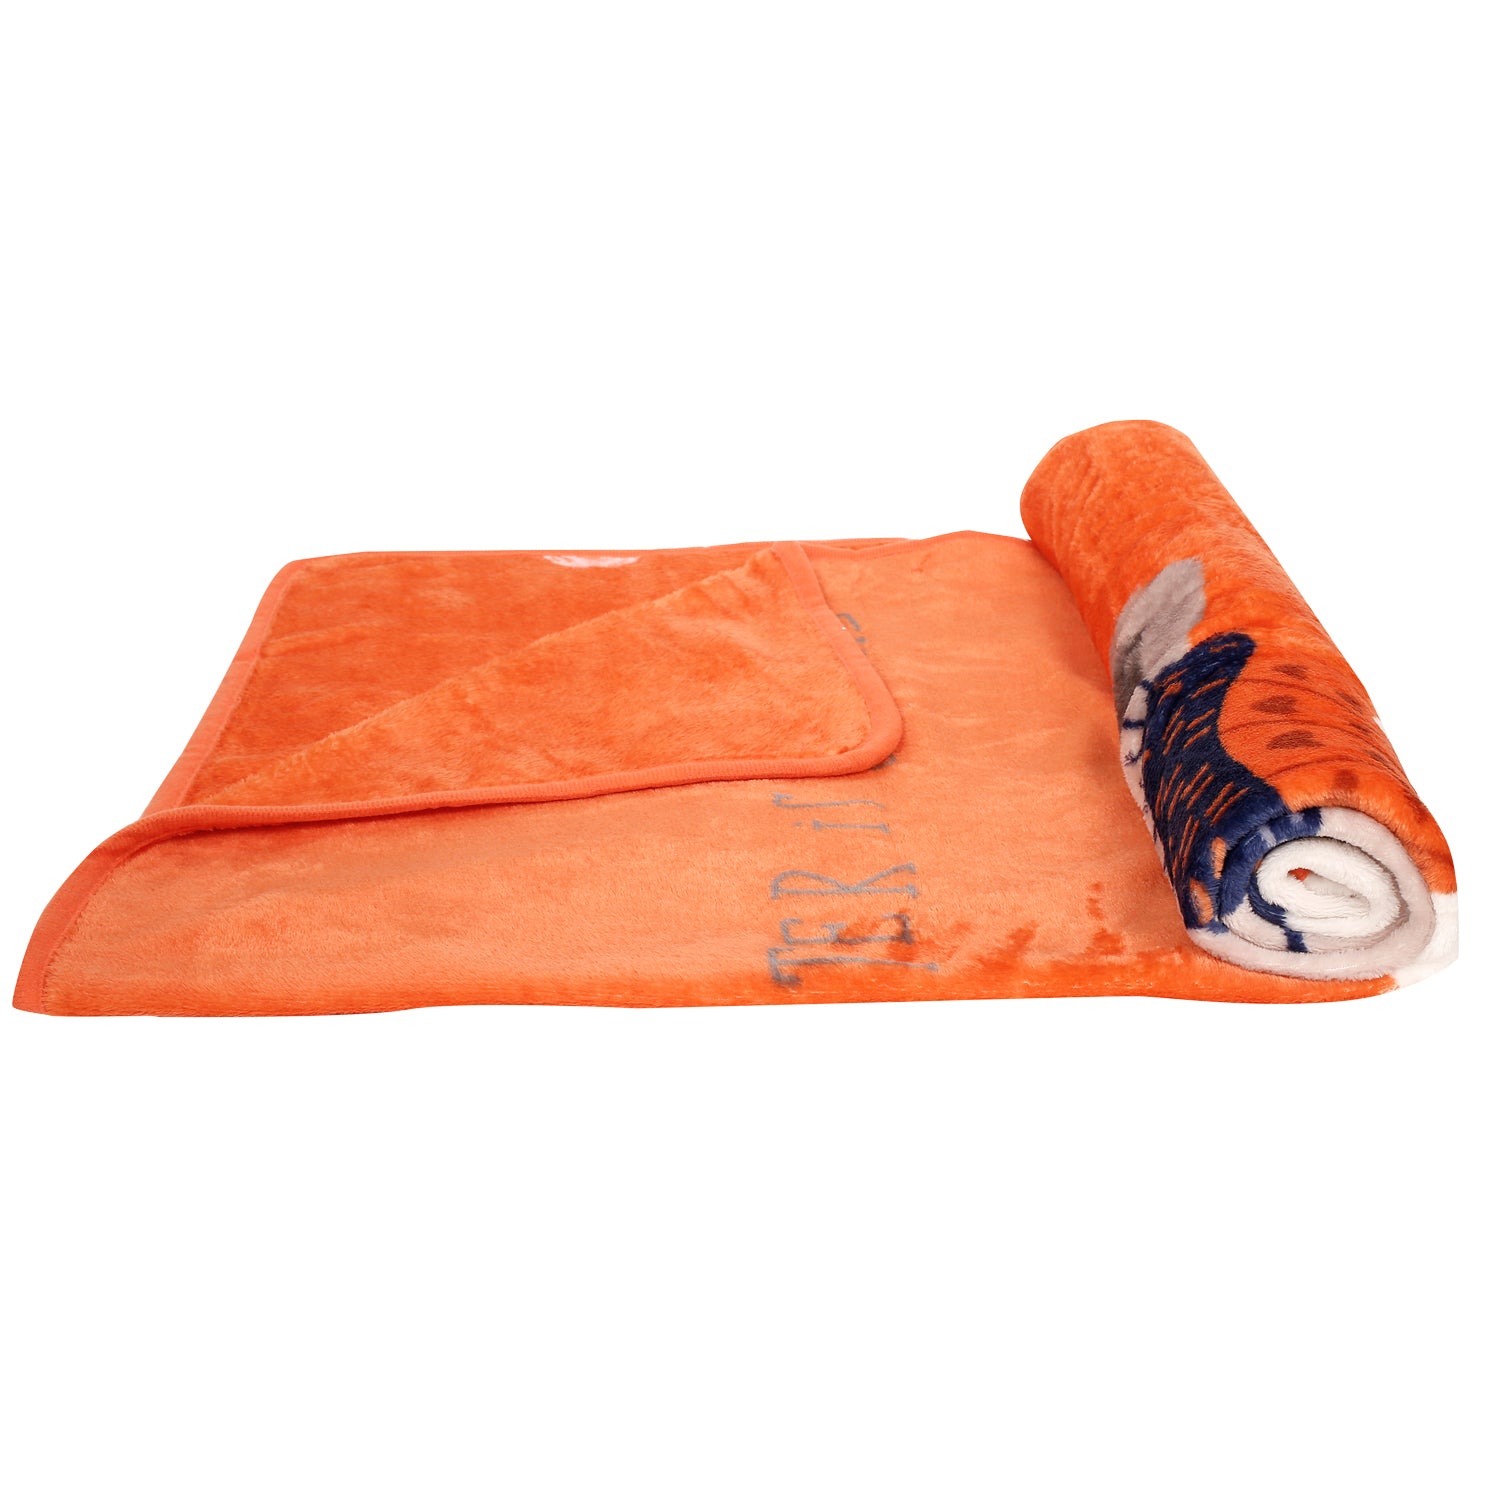 Winter Is Coming Orange One Ply Blanket - Baby Moo